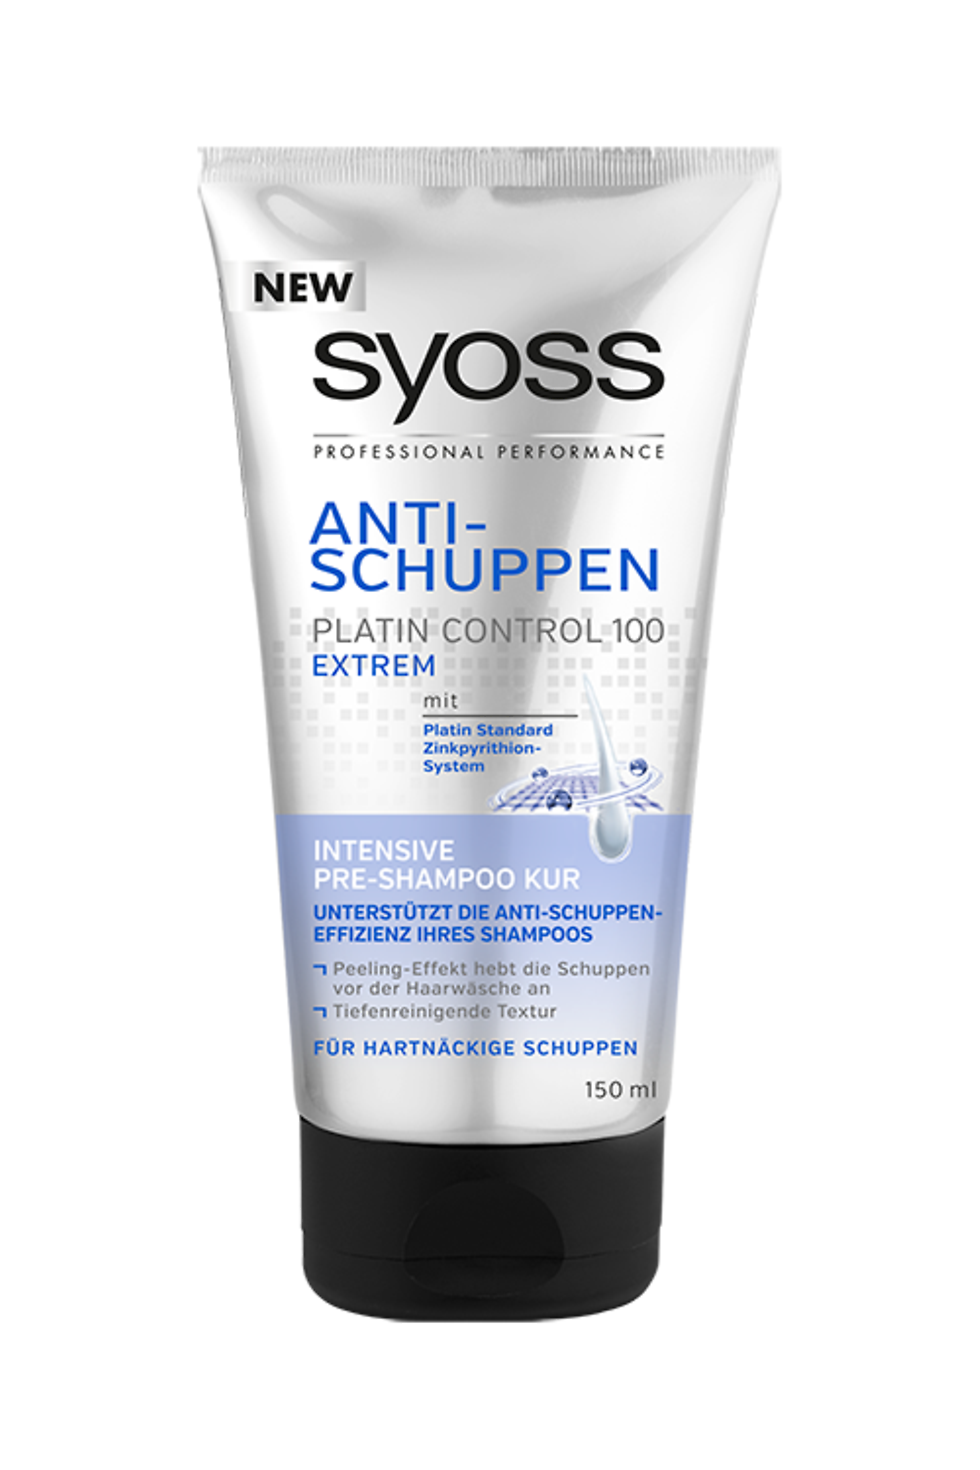 Syoss Anti-Schuppen Platin Control 100 Extrem Intensive Pre-Shampoo Kur